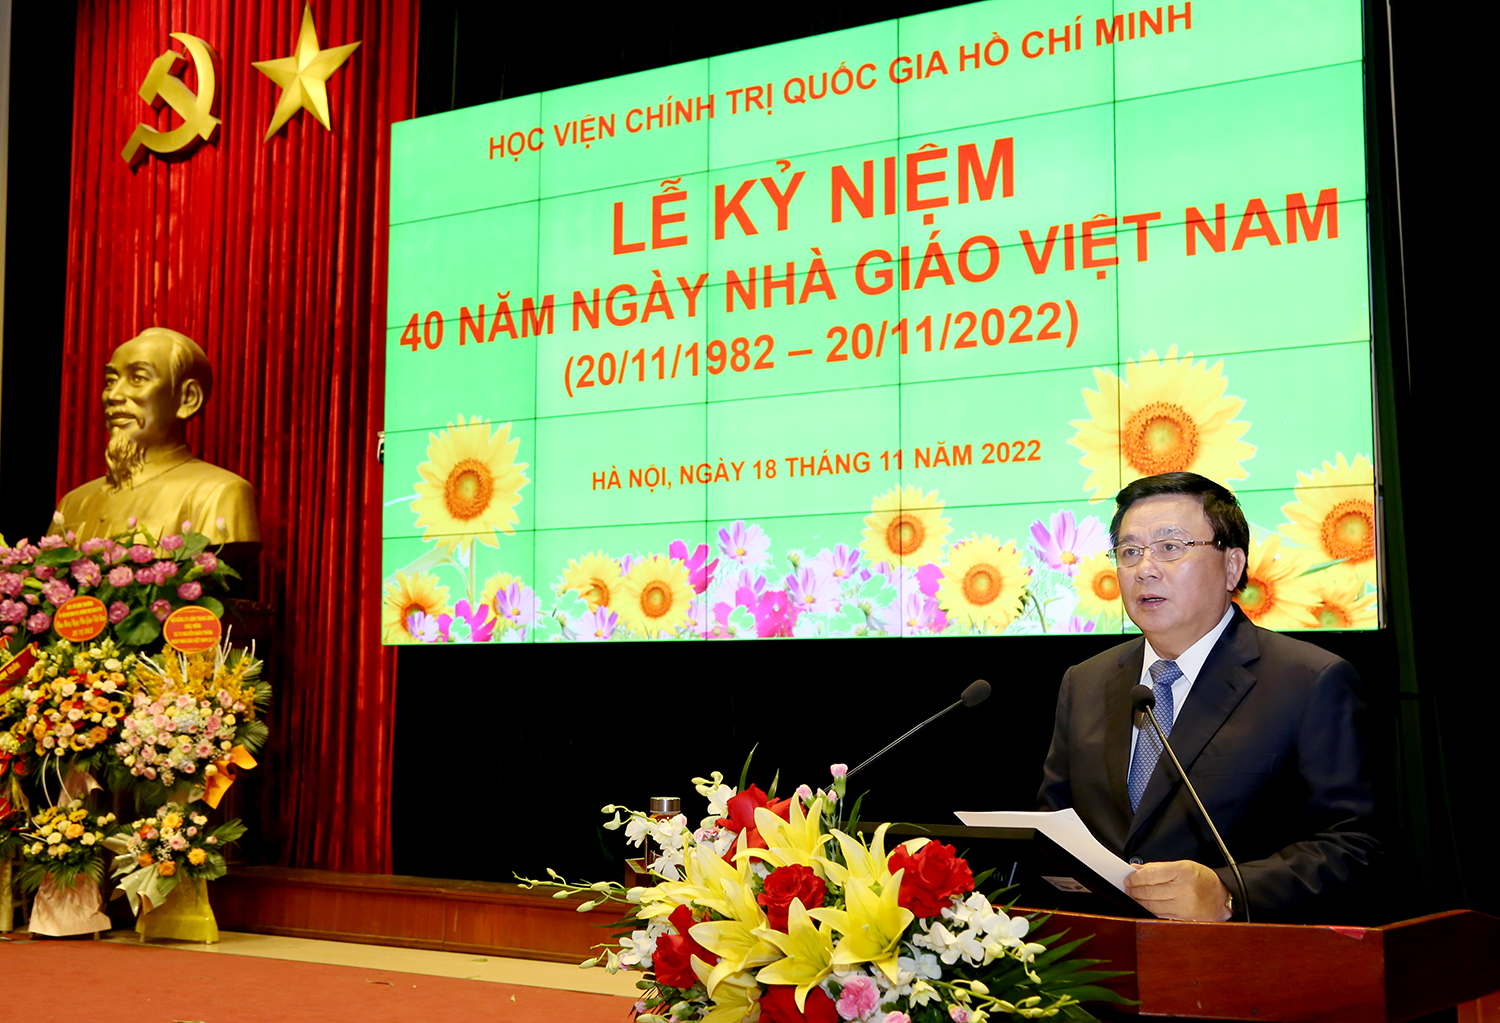 Ho Chi Minh National Academy of Politics celebrates 40th anniversary of Vietnamese Teachers’ Day (20th November 2022)